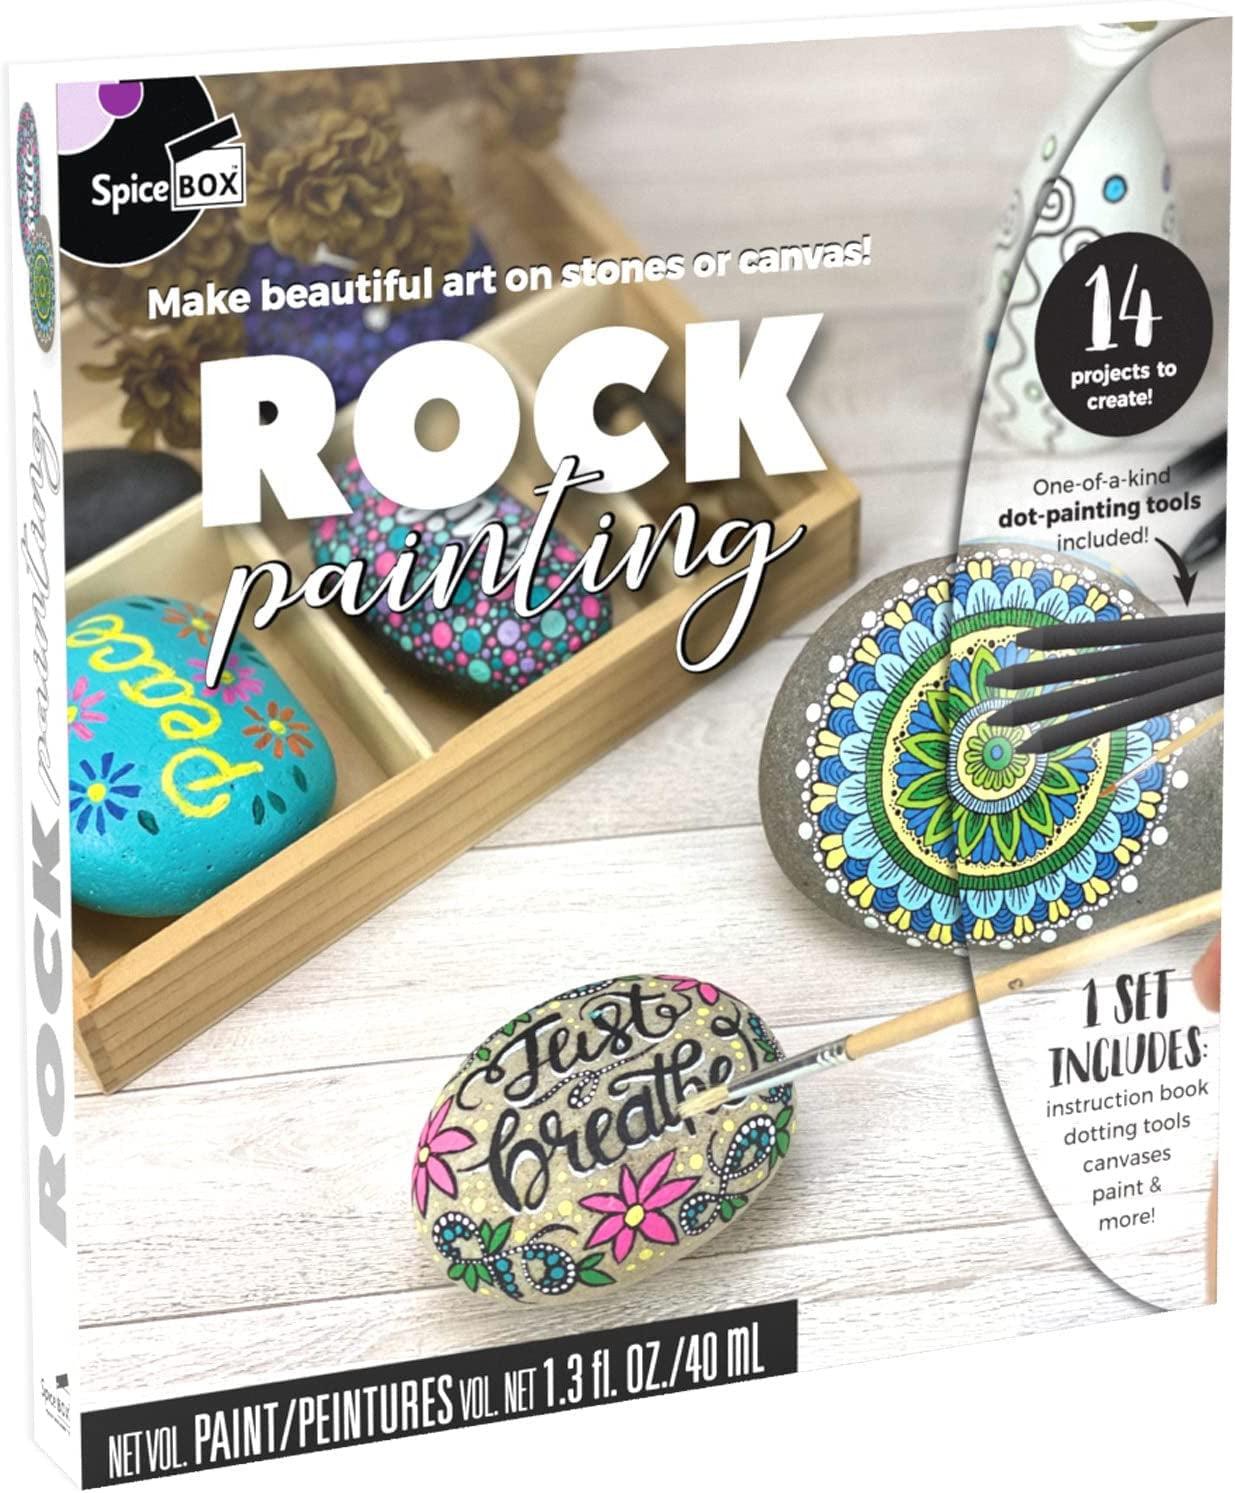 Adult Art Craft & Hobby Kits Sketch plus Rock Painting, Multi Colors, (13459) - WoodArtSupply